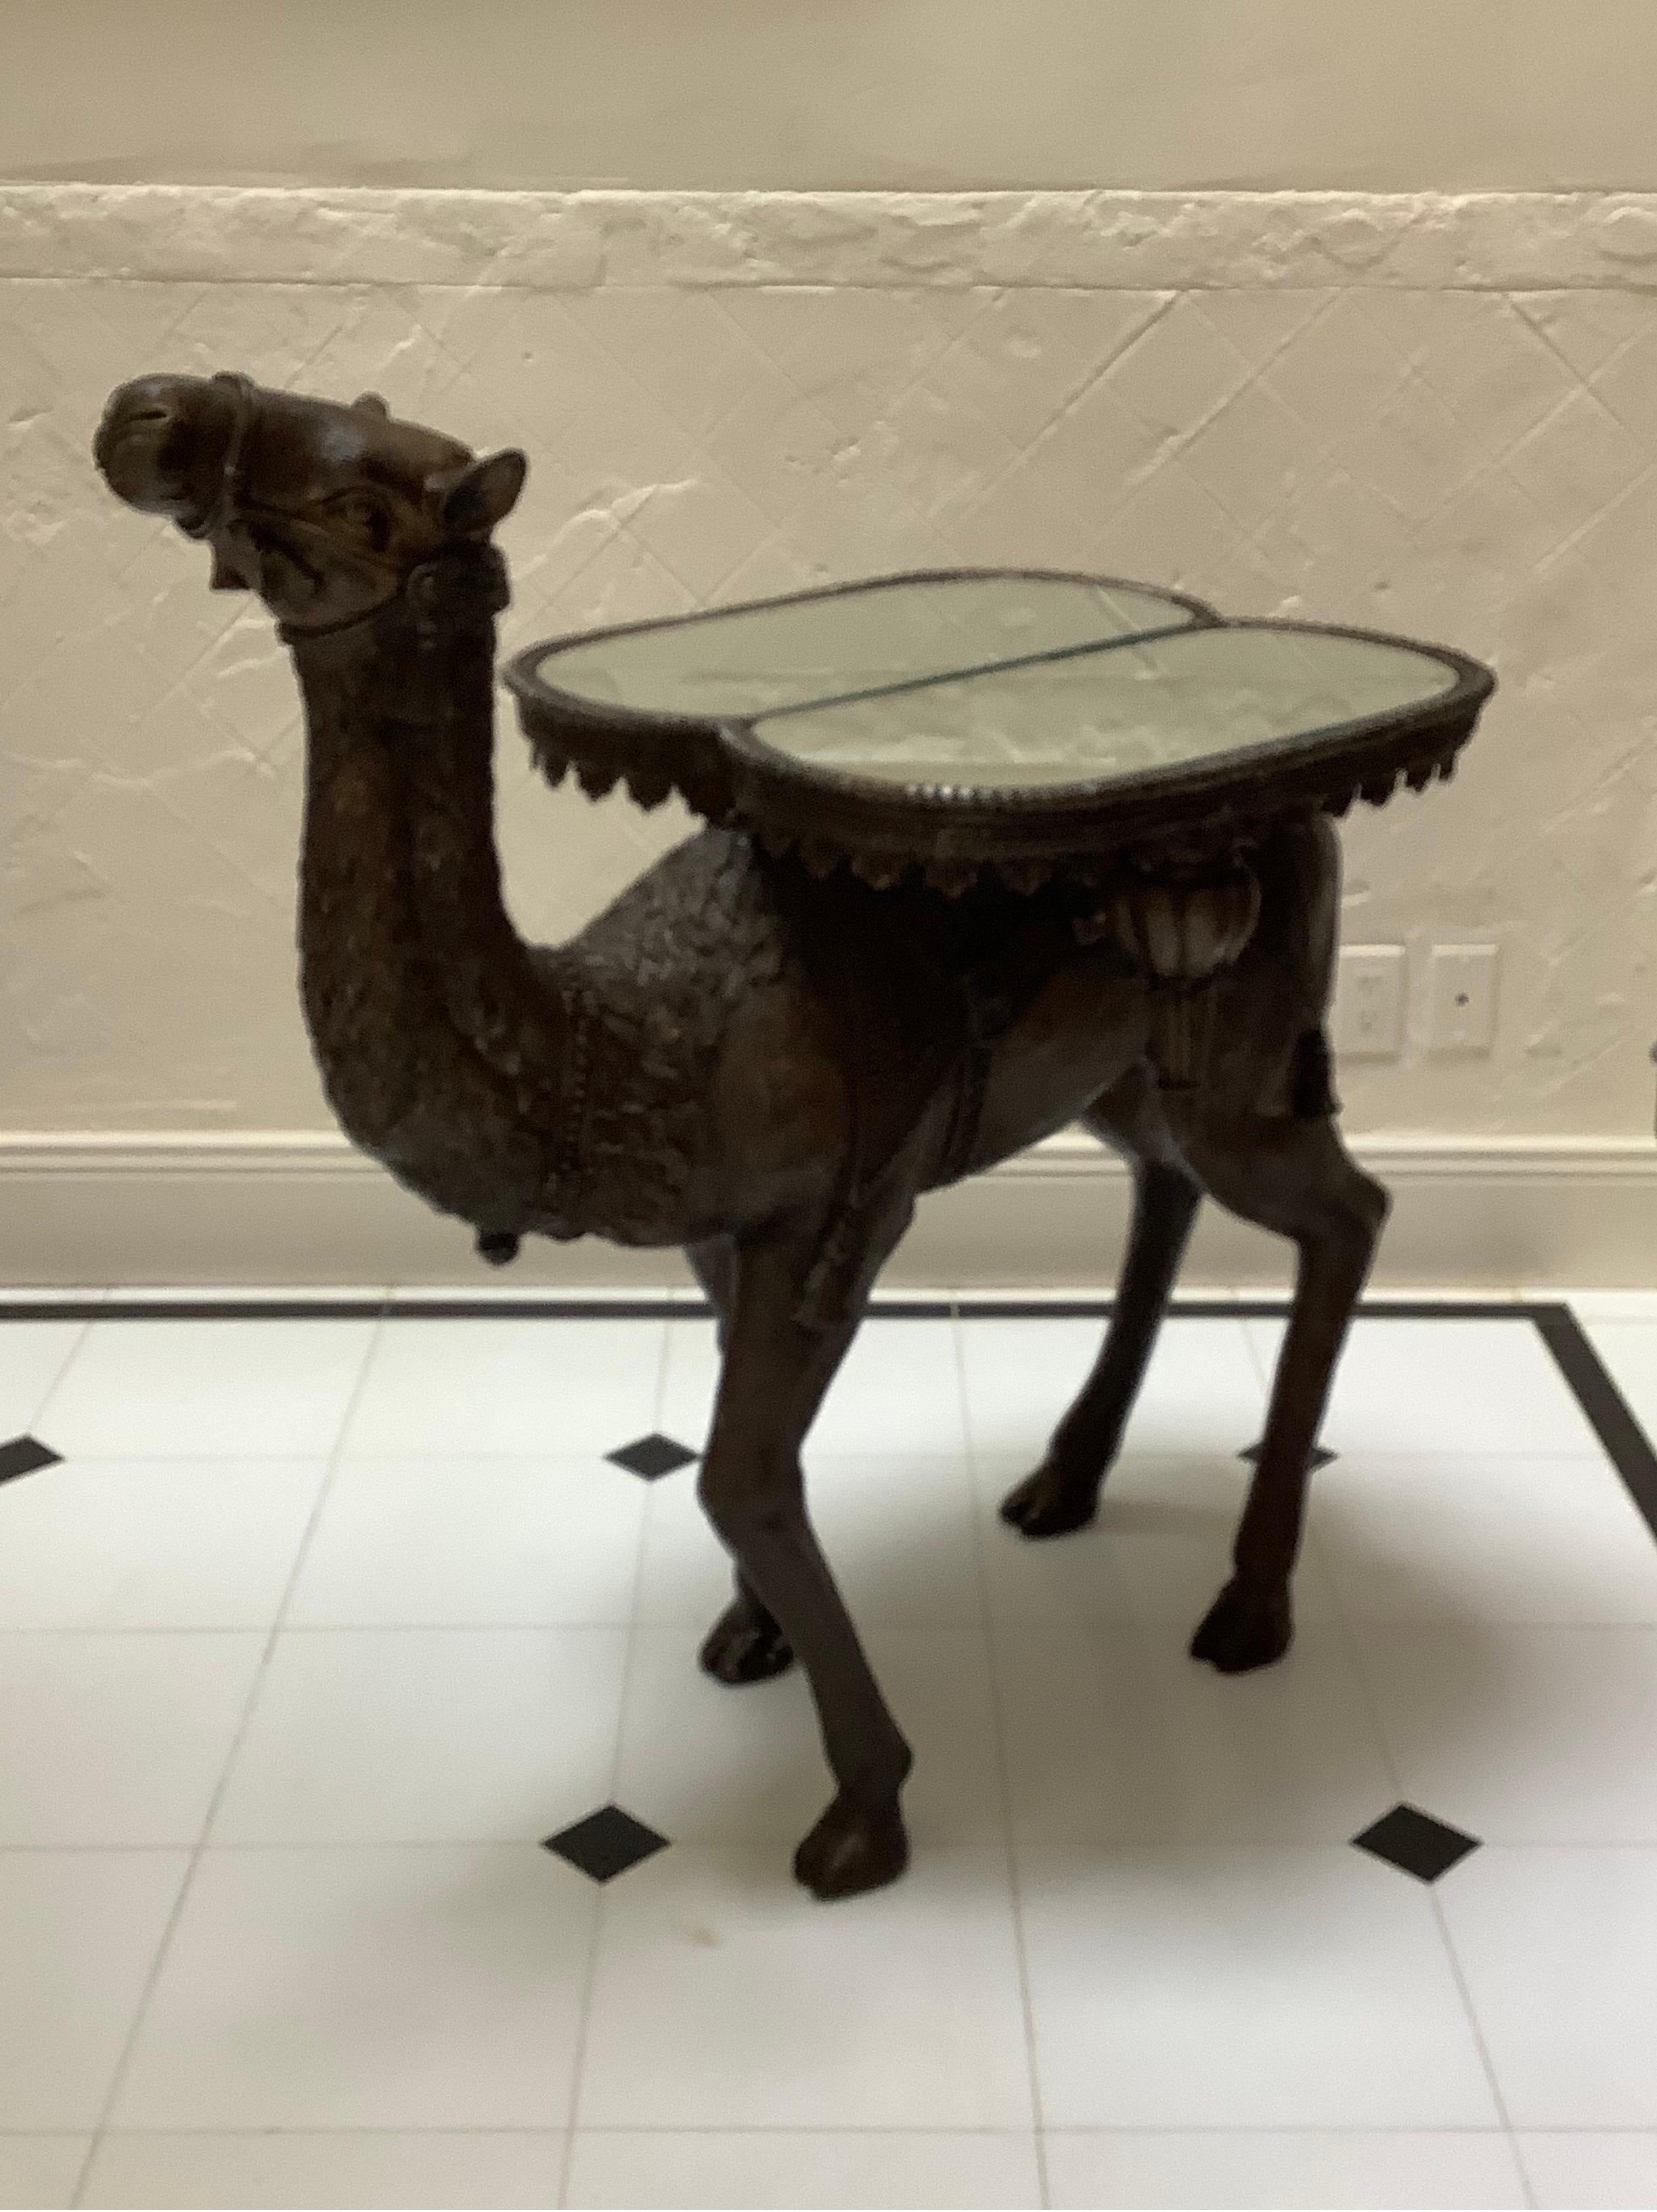 Bronze Camel Sculpture Accent Cocktail Table

Dimensions 48 length x 43.5h x 25w